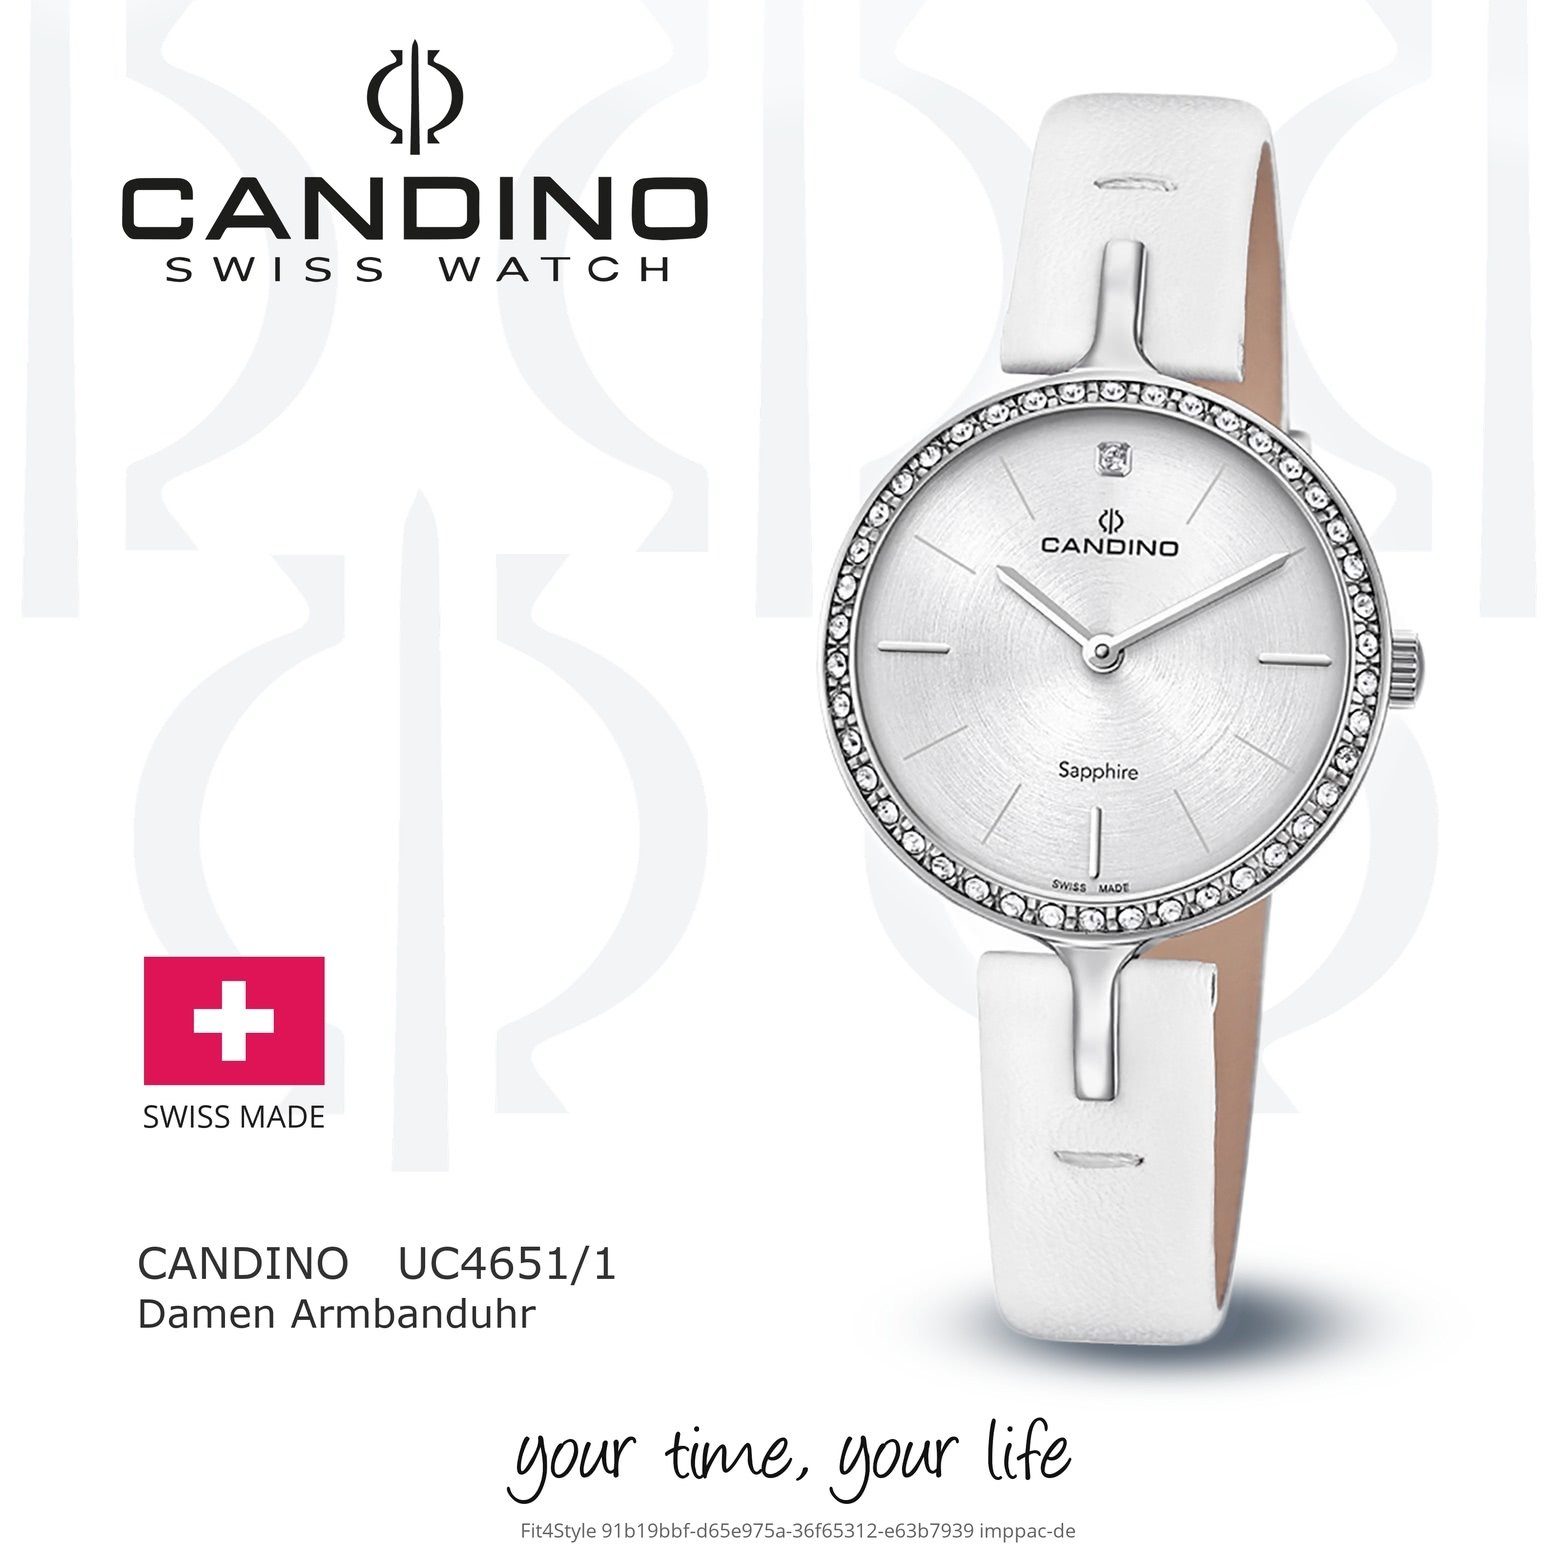 rund, Quarzuhr Lederarmband weiß, Damen Quarzuhr Damen Candino Armbanduhr C4651/1, Candino Fashion Analog